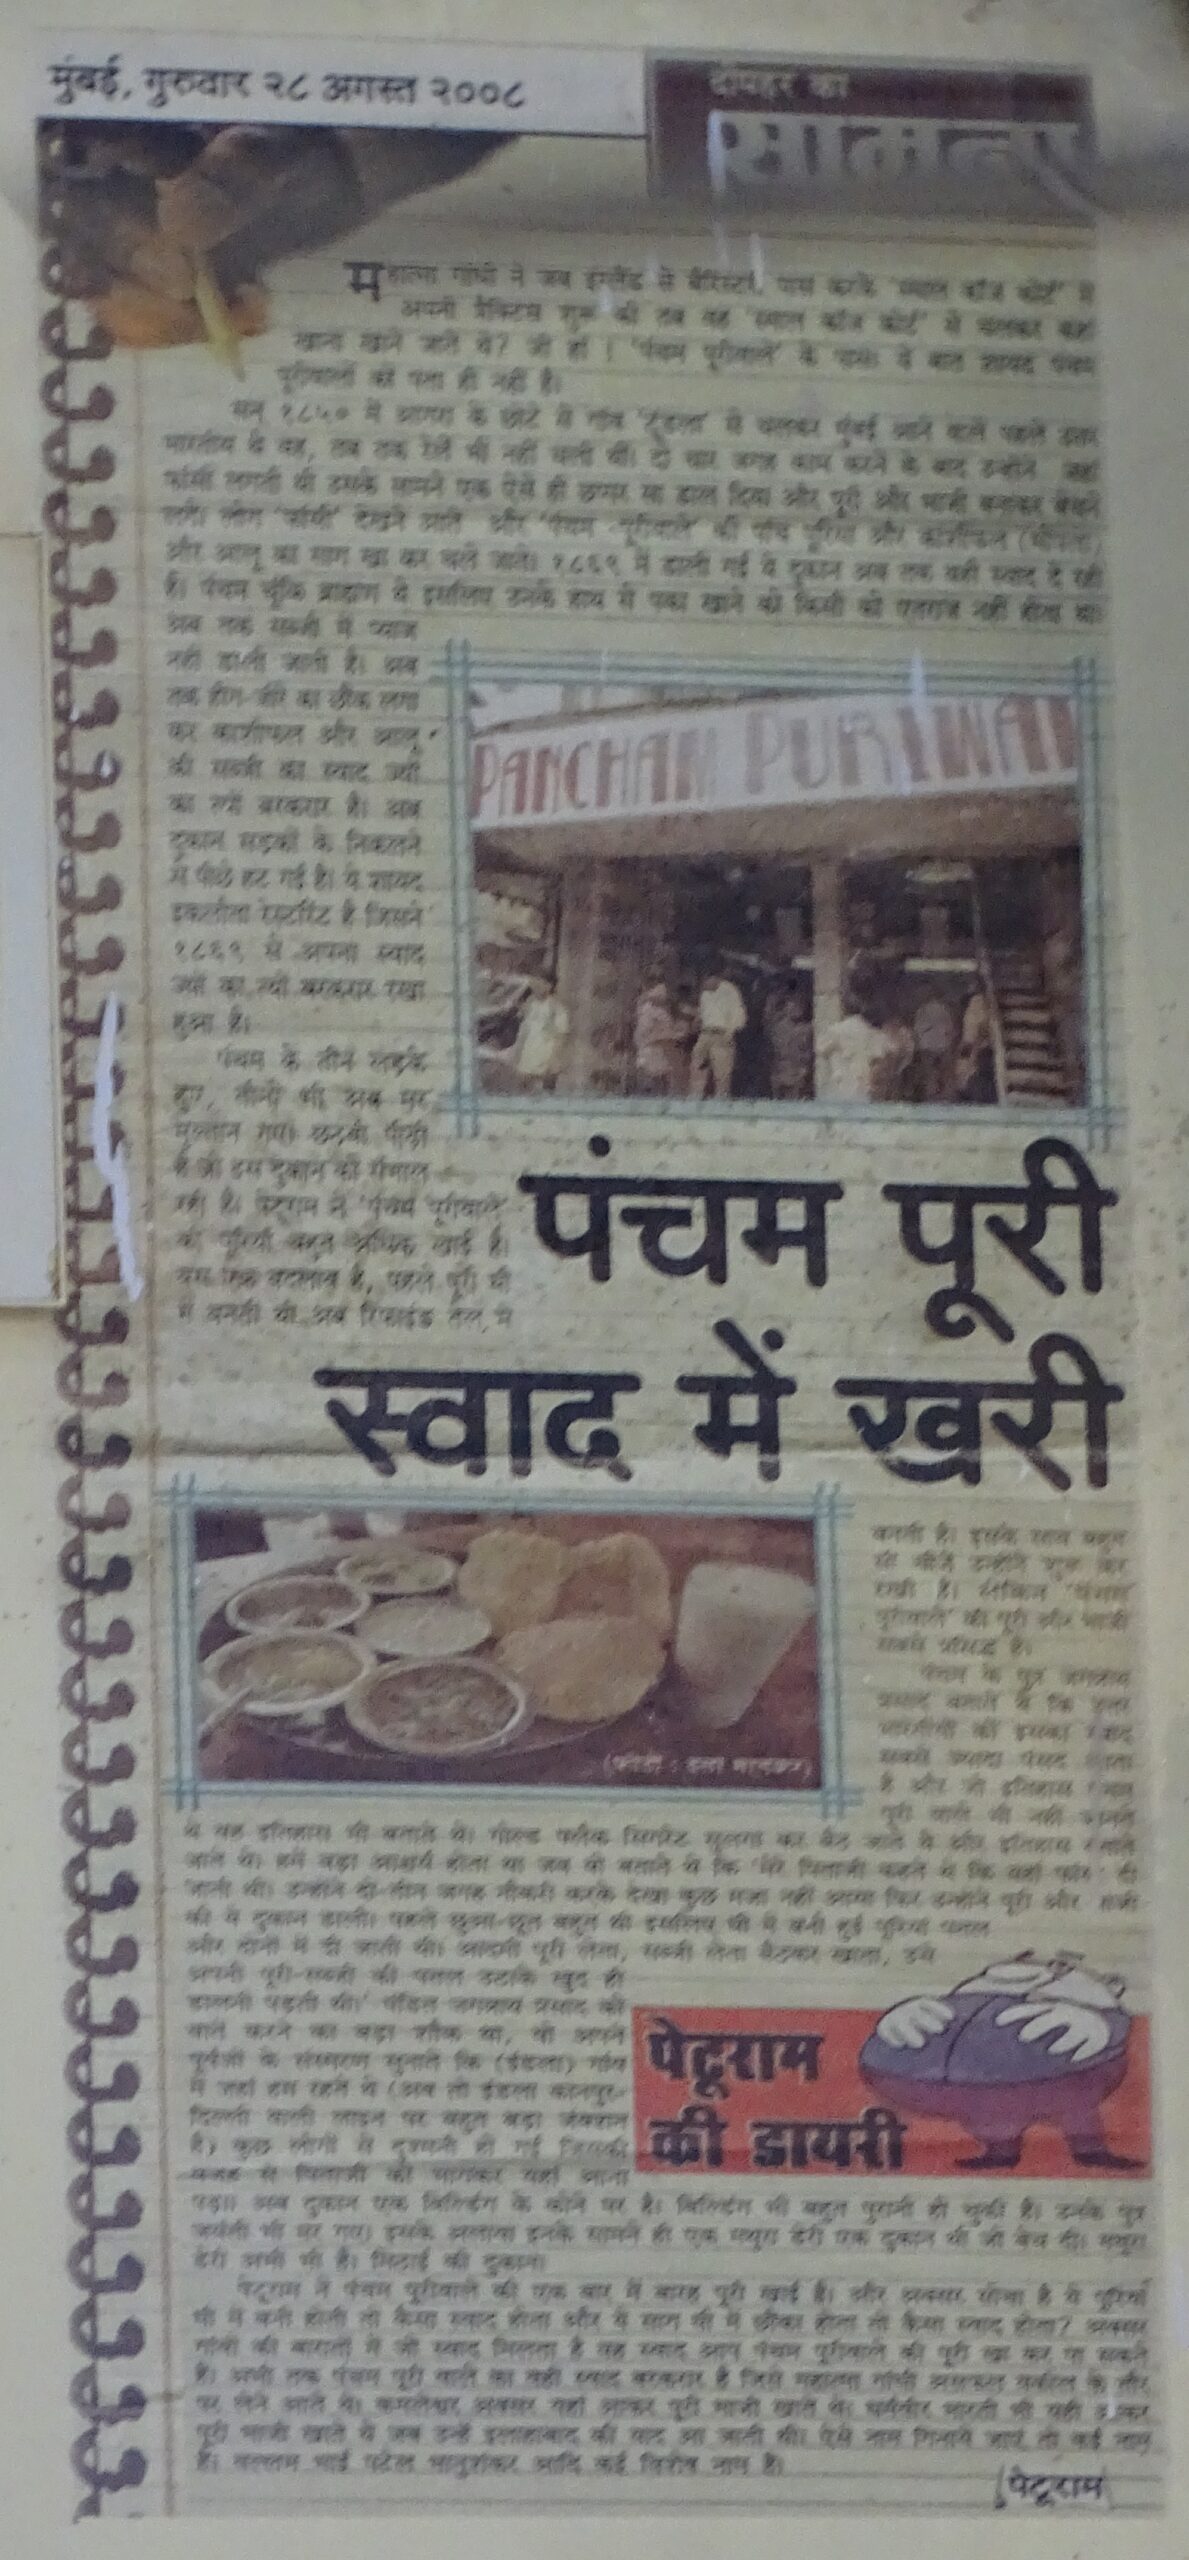 Article (in Hindi Language) on Pancham Puriwala by Saamana